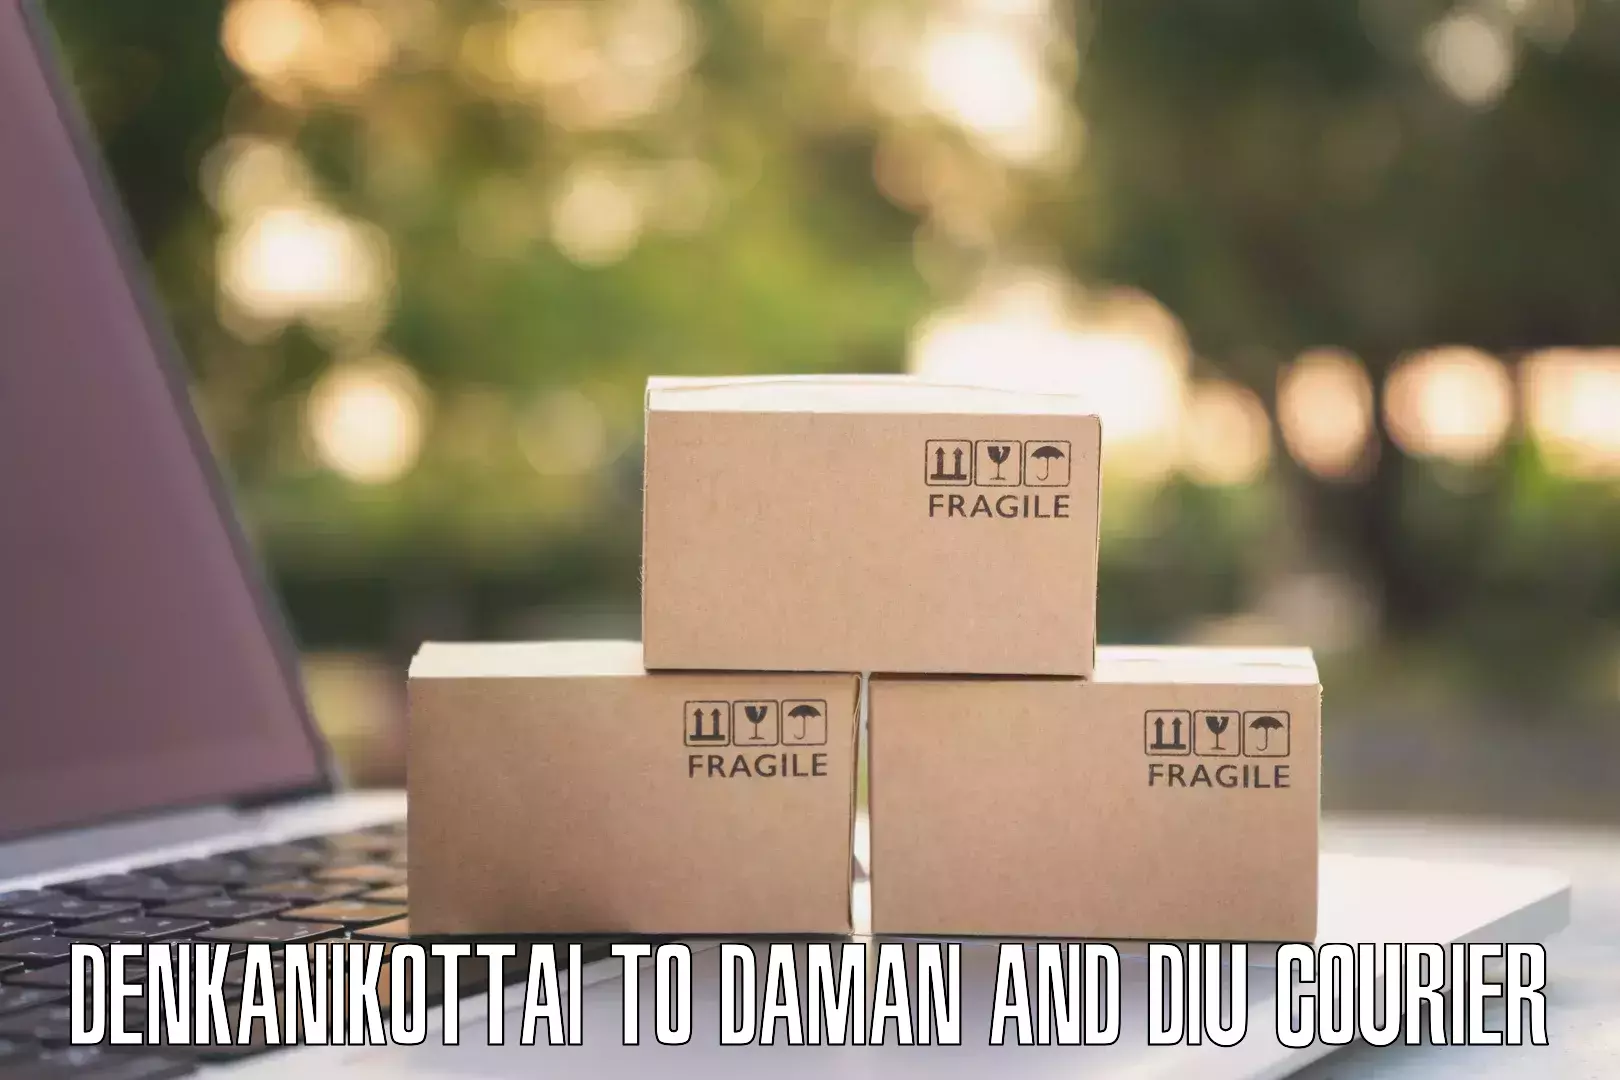 Cross-border shipping Denkanikottai to Daman and Diu